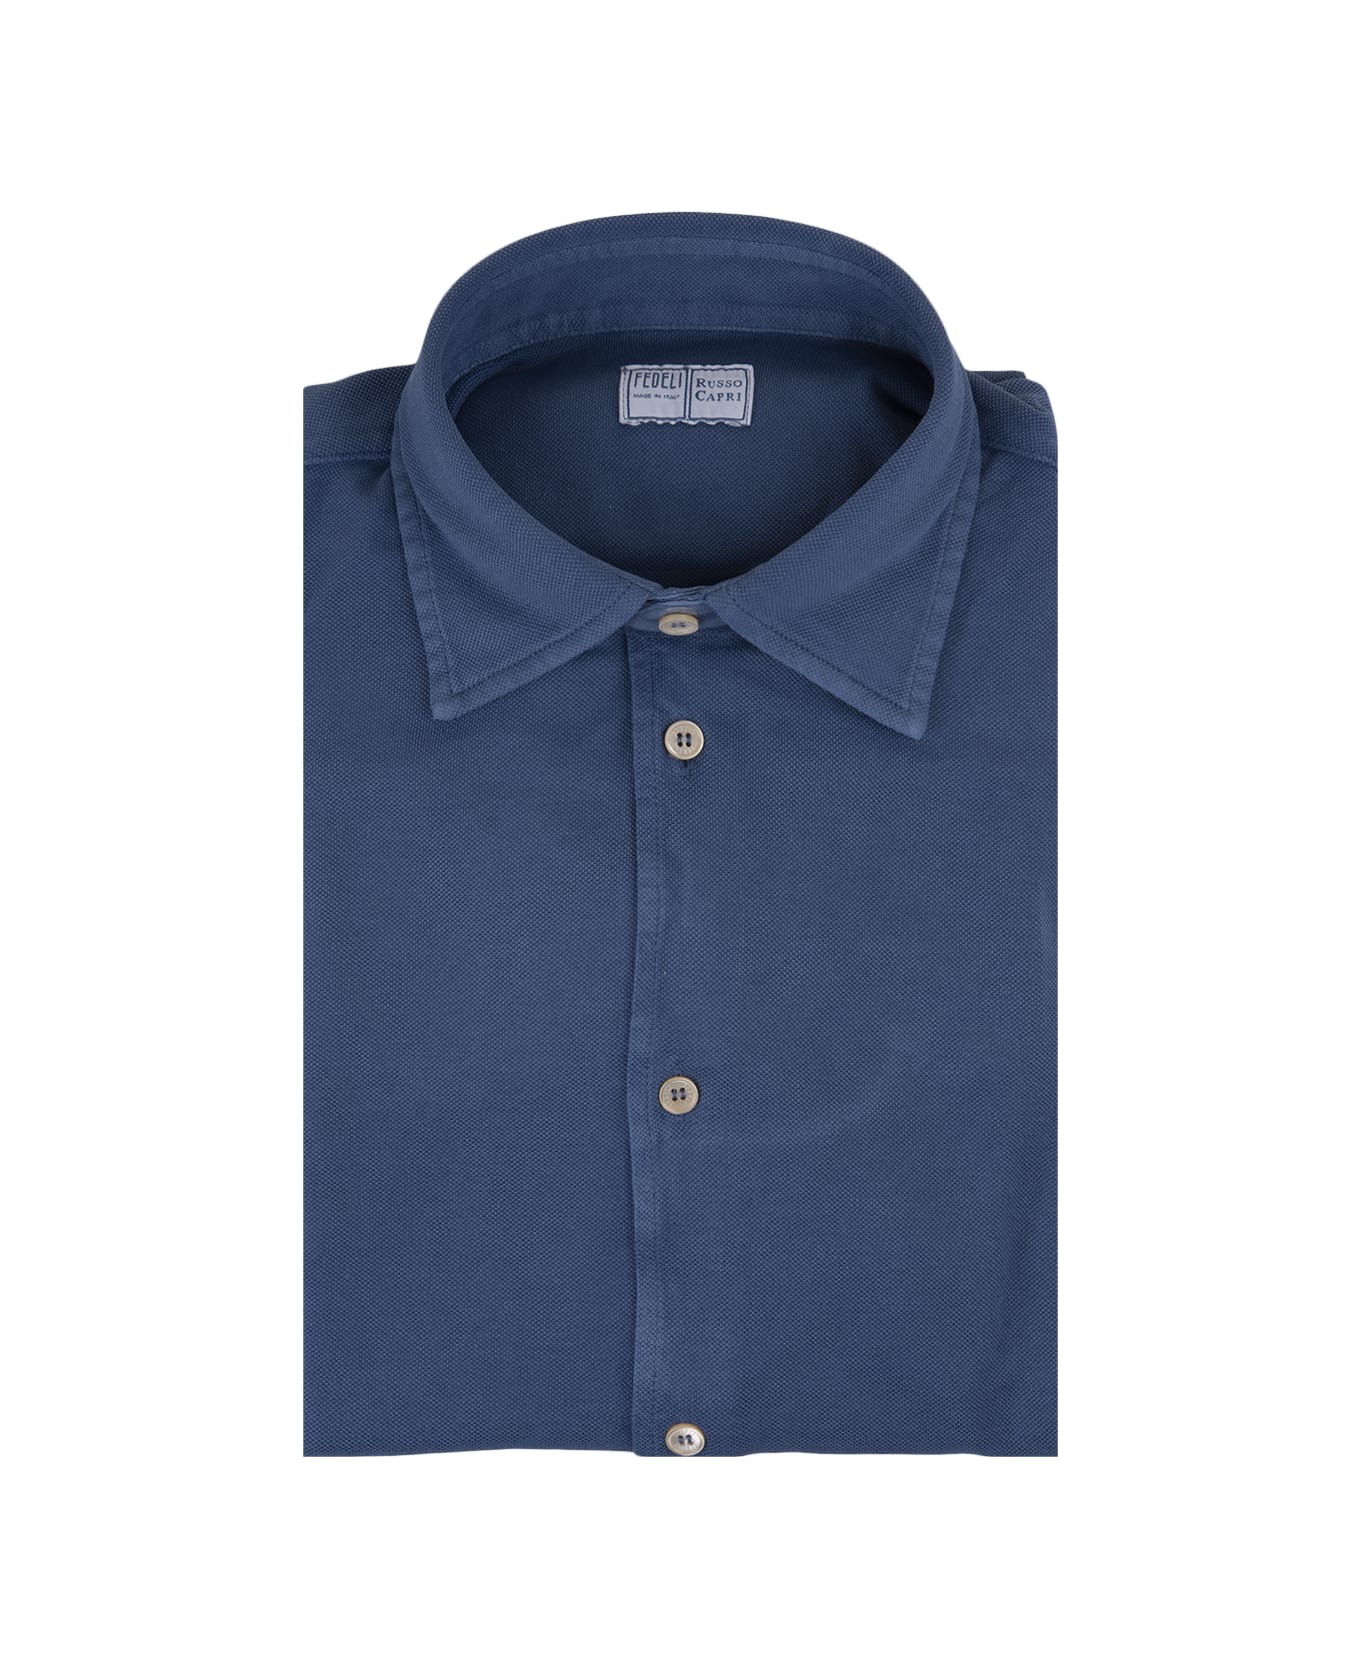 Fedeli Teorema Shirt In Blue Cotton Piqué - Blue